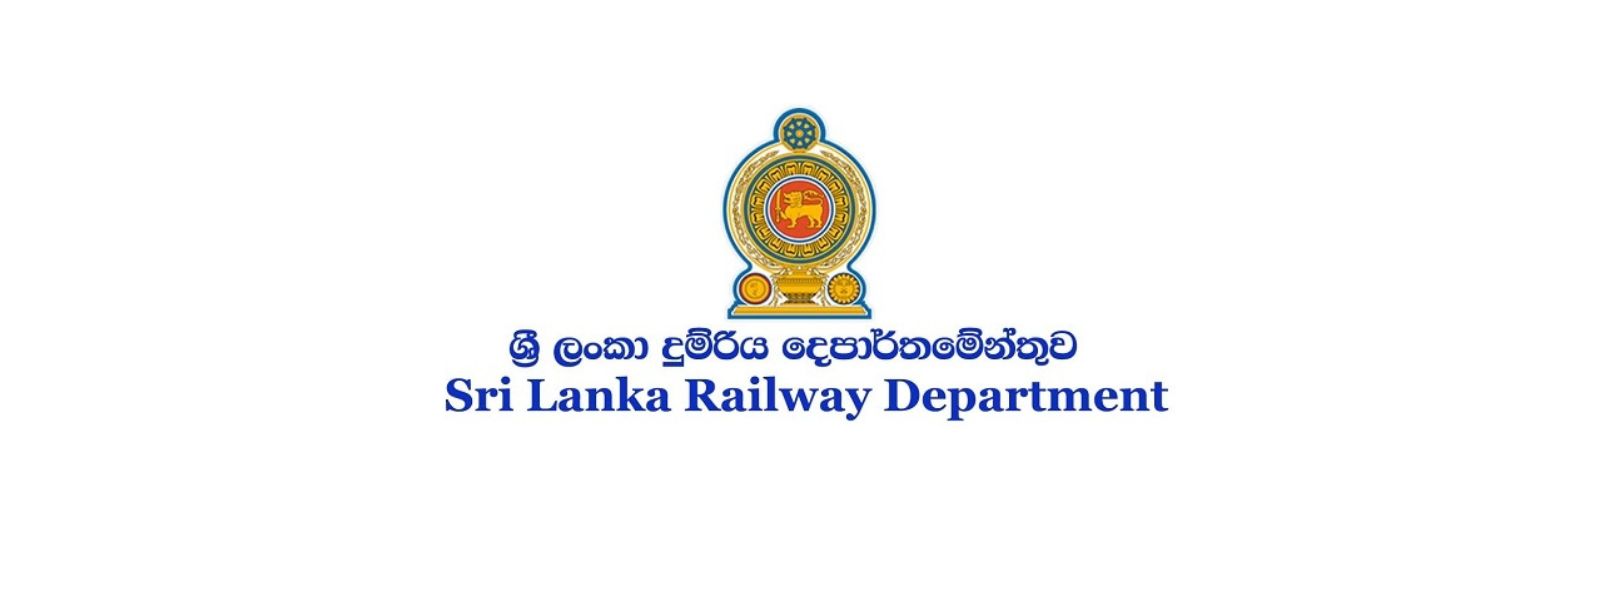 Registration deadline for Railway Department Land